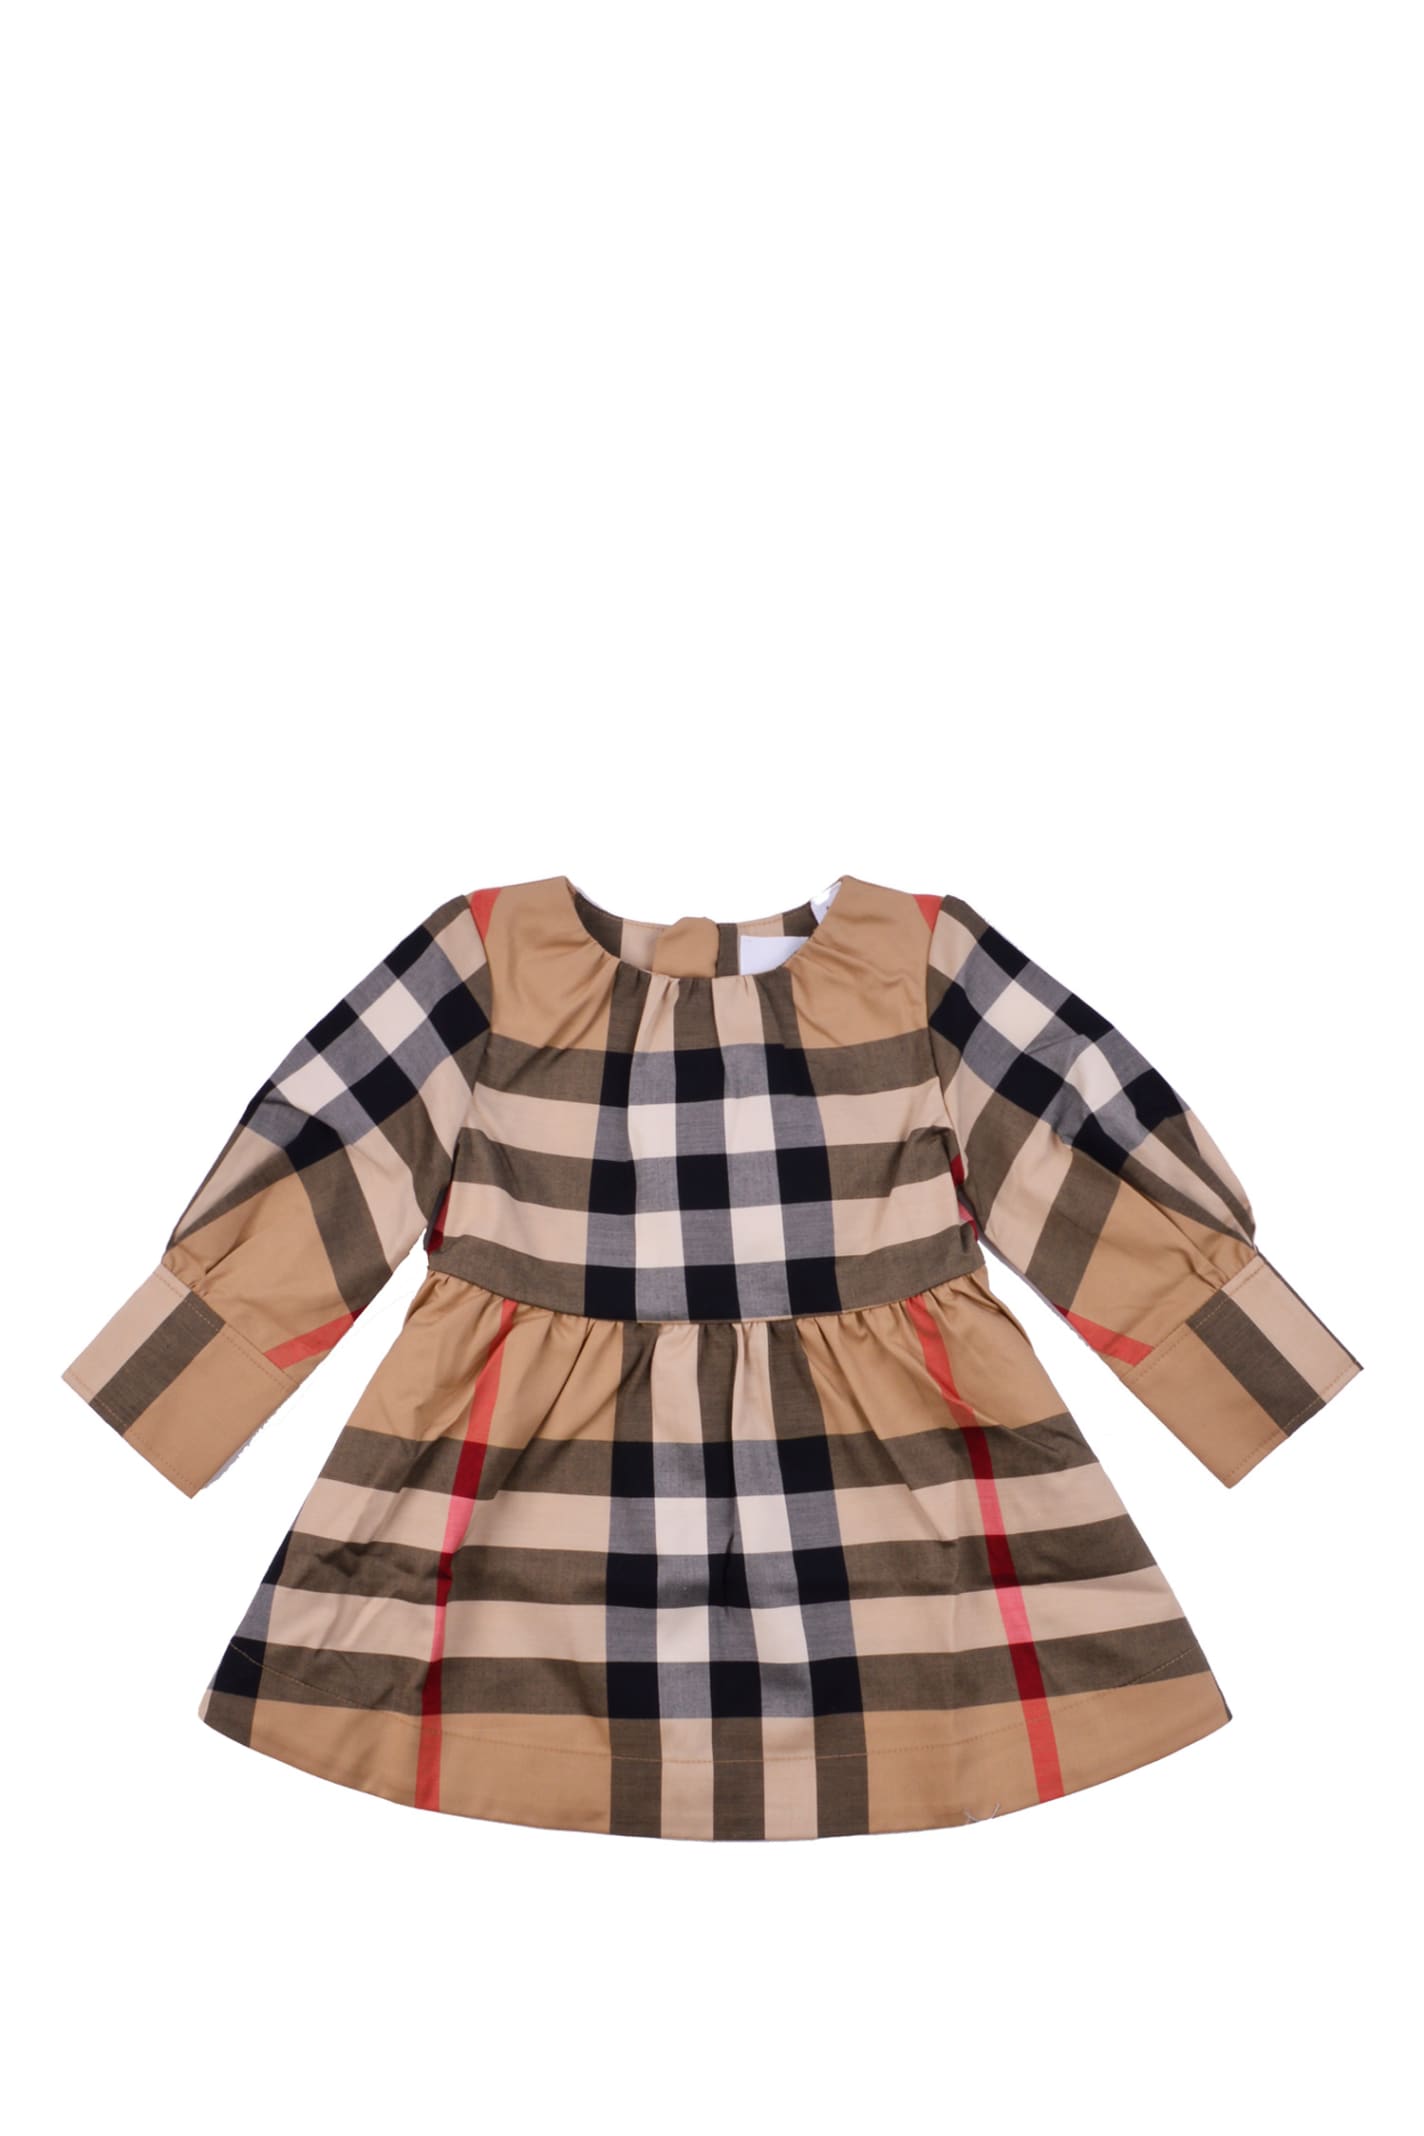 Burberry Kids' Dress Tartan In Brown | ModeSens